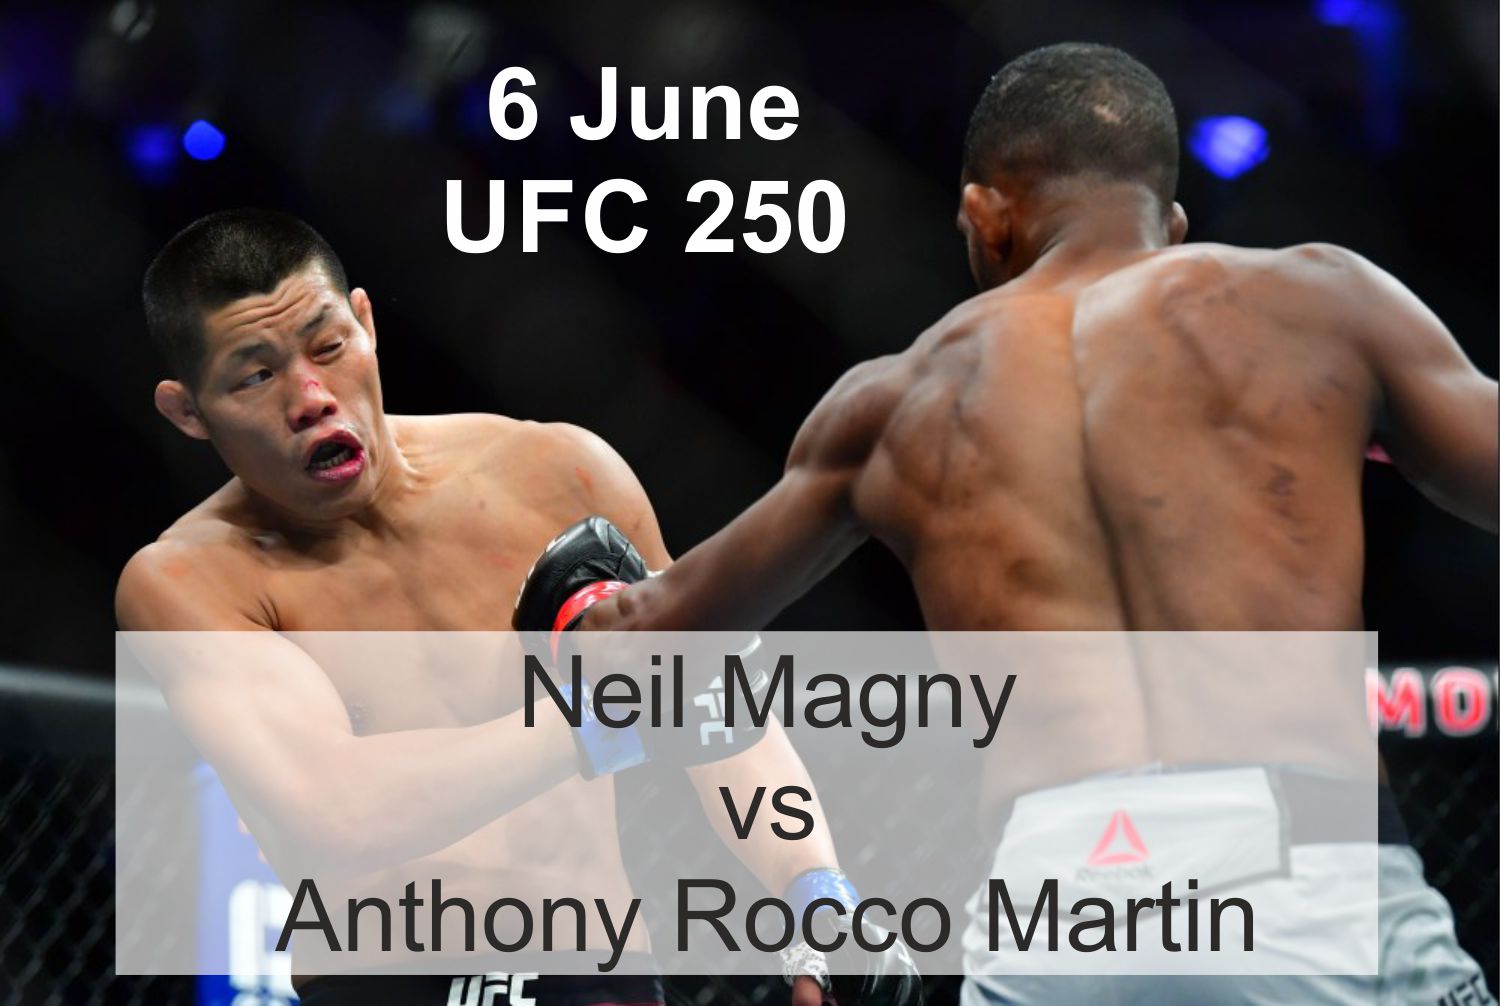 Neil Magny vs Anthony Rocco Martin 6 June UFC 250